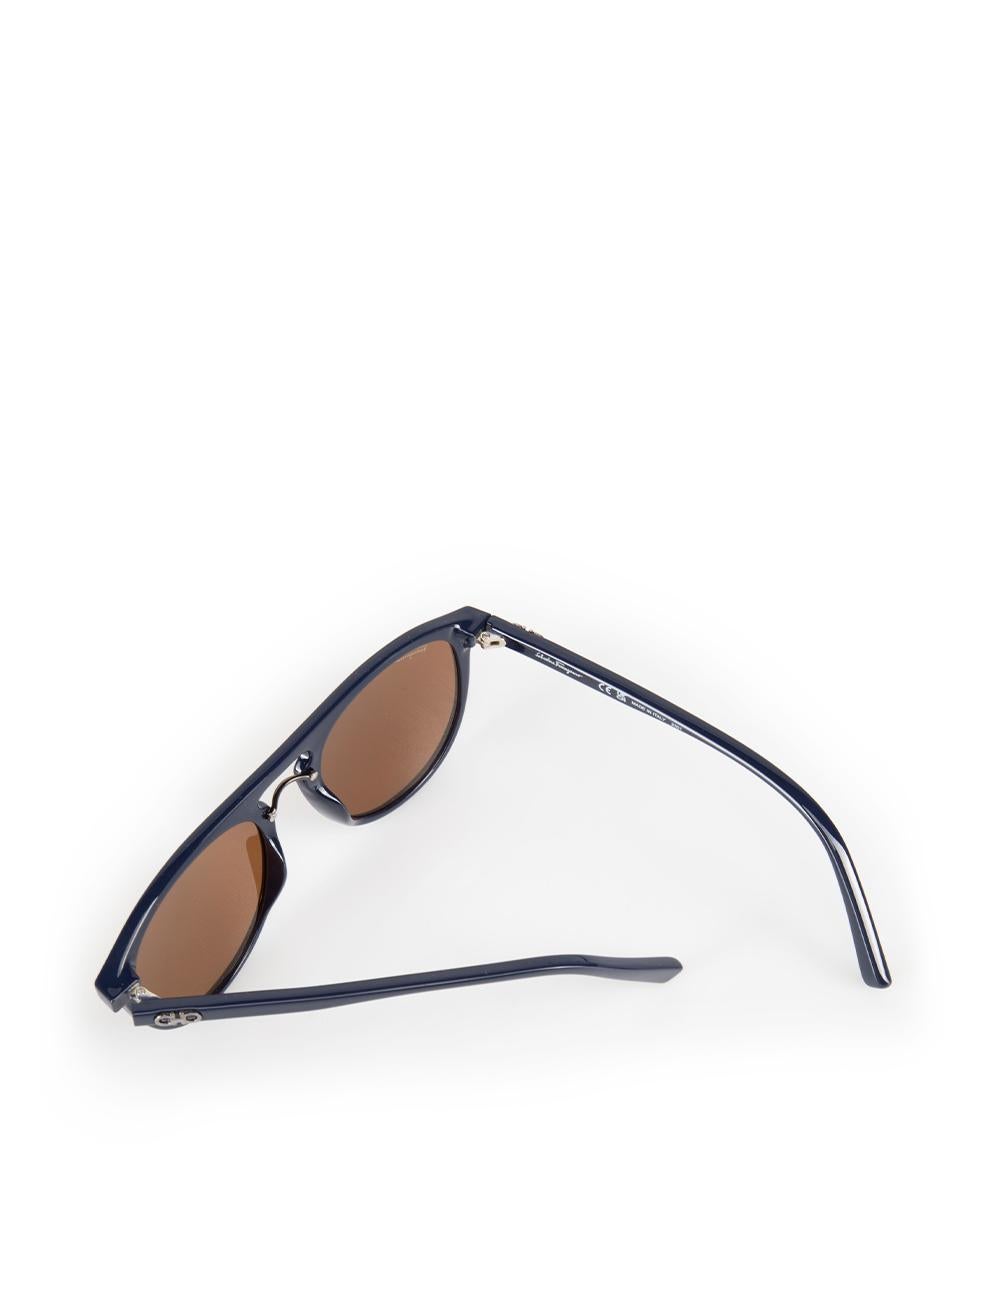 Salvatore Ferragamo Blue Aviator Amber Lens Sunglasses For Sale 2